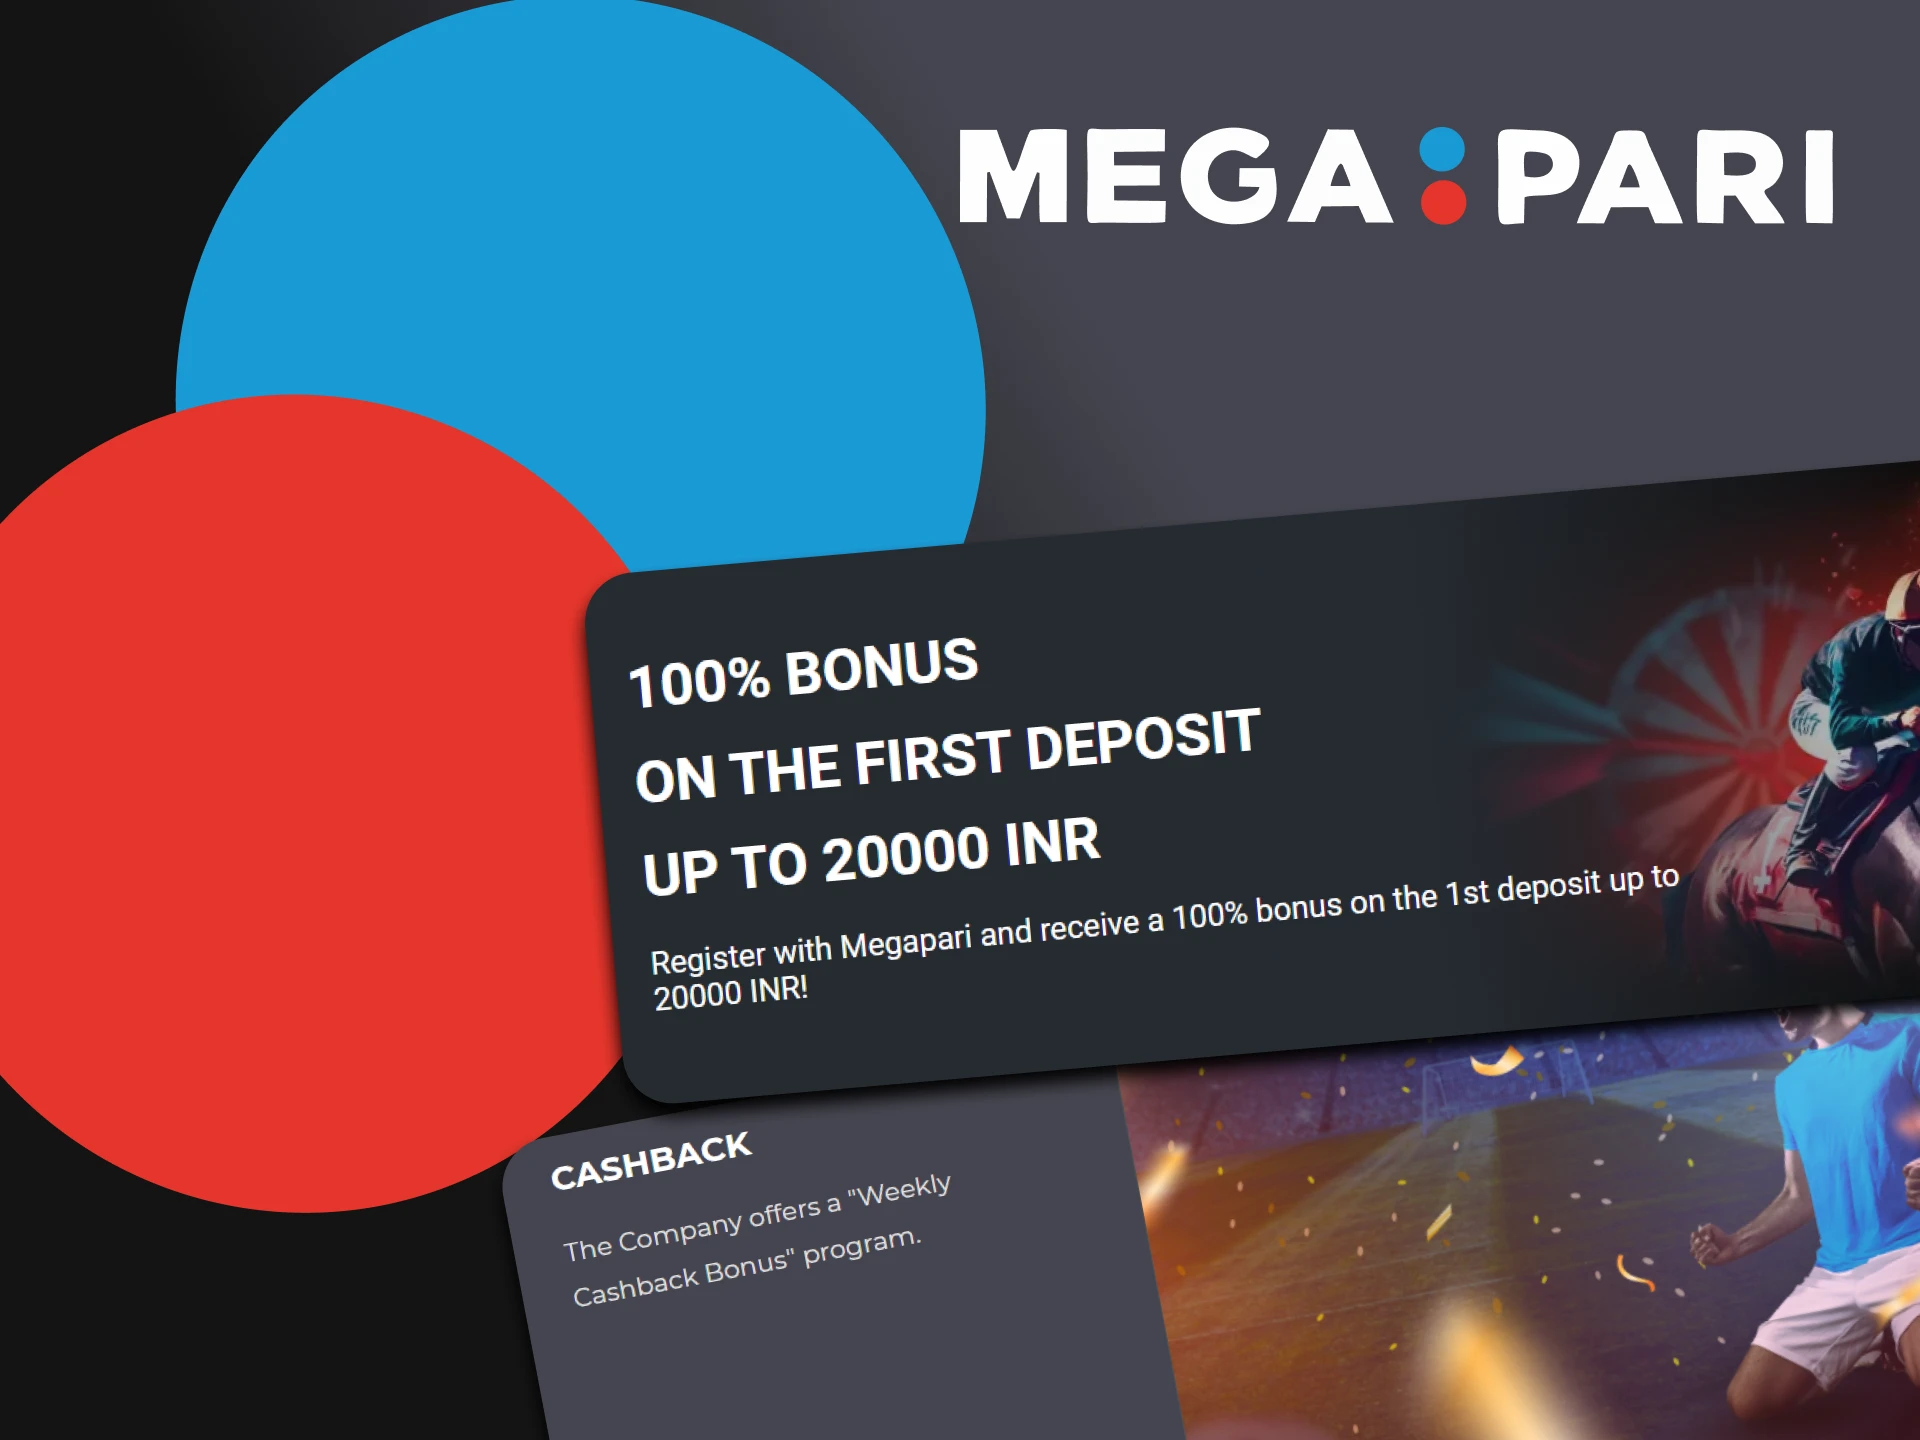 Megapari gives various bonuses to its users.